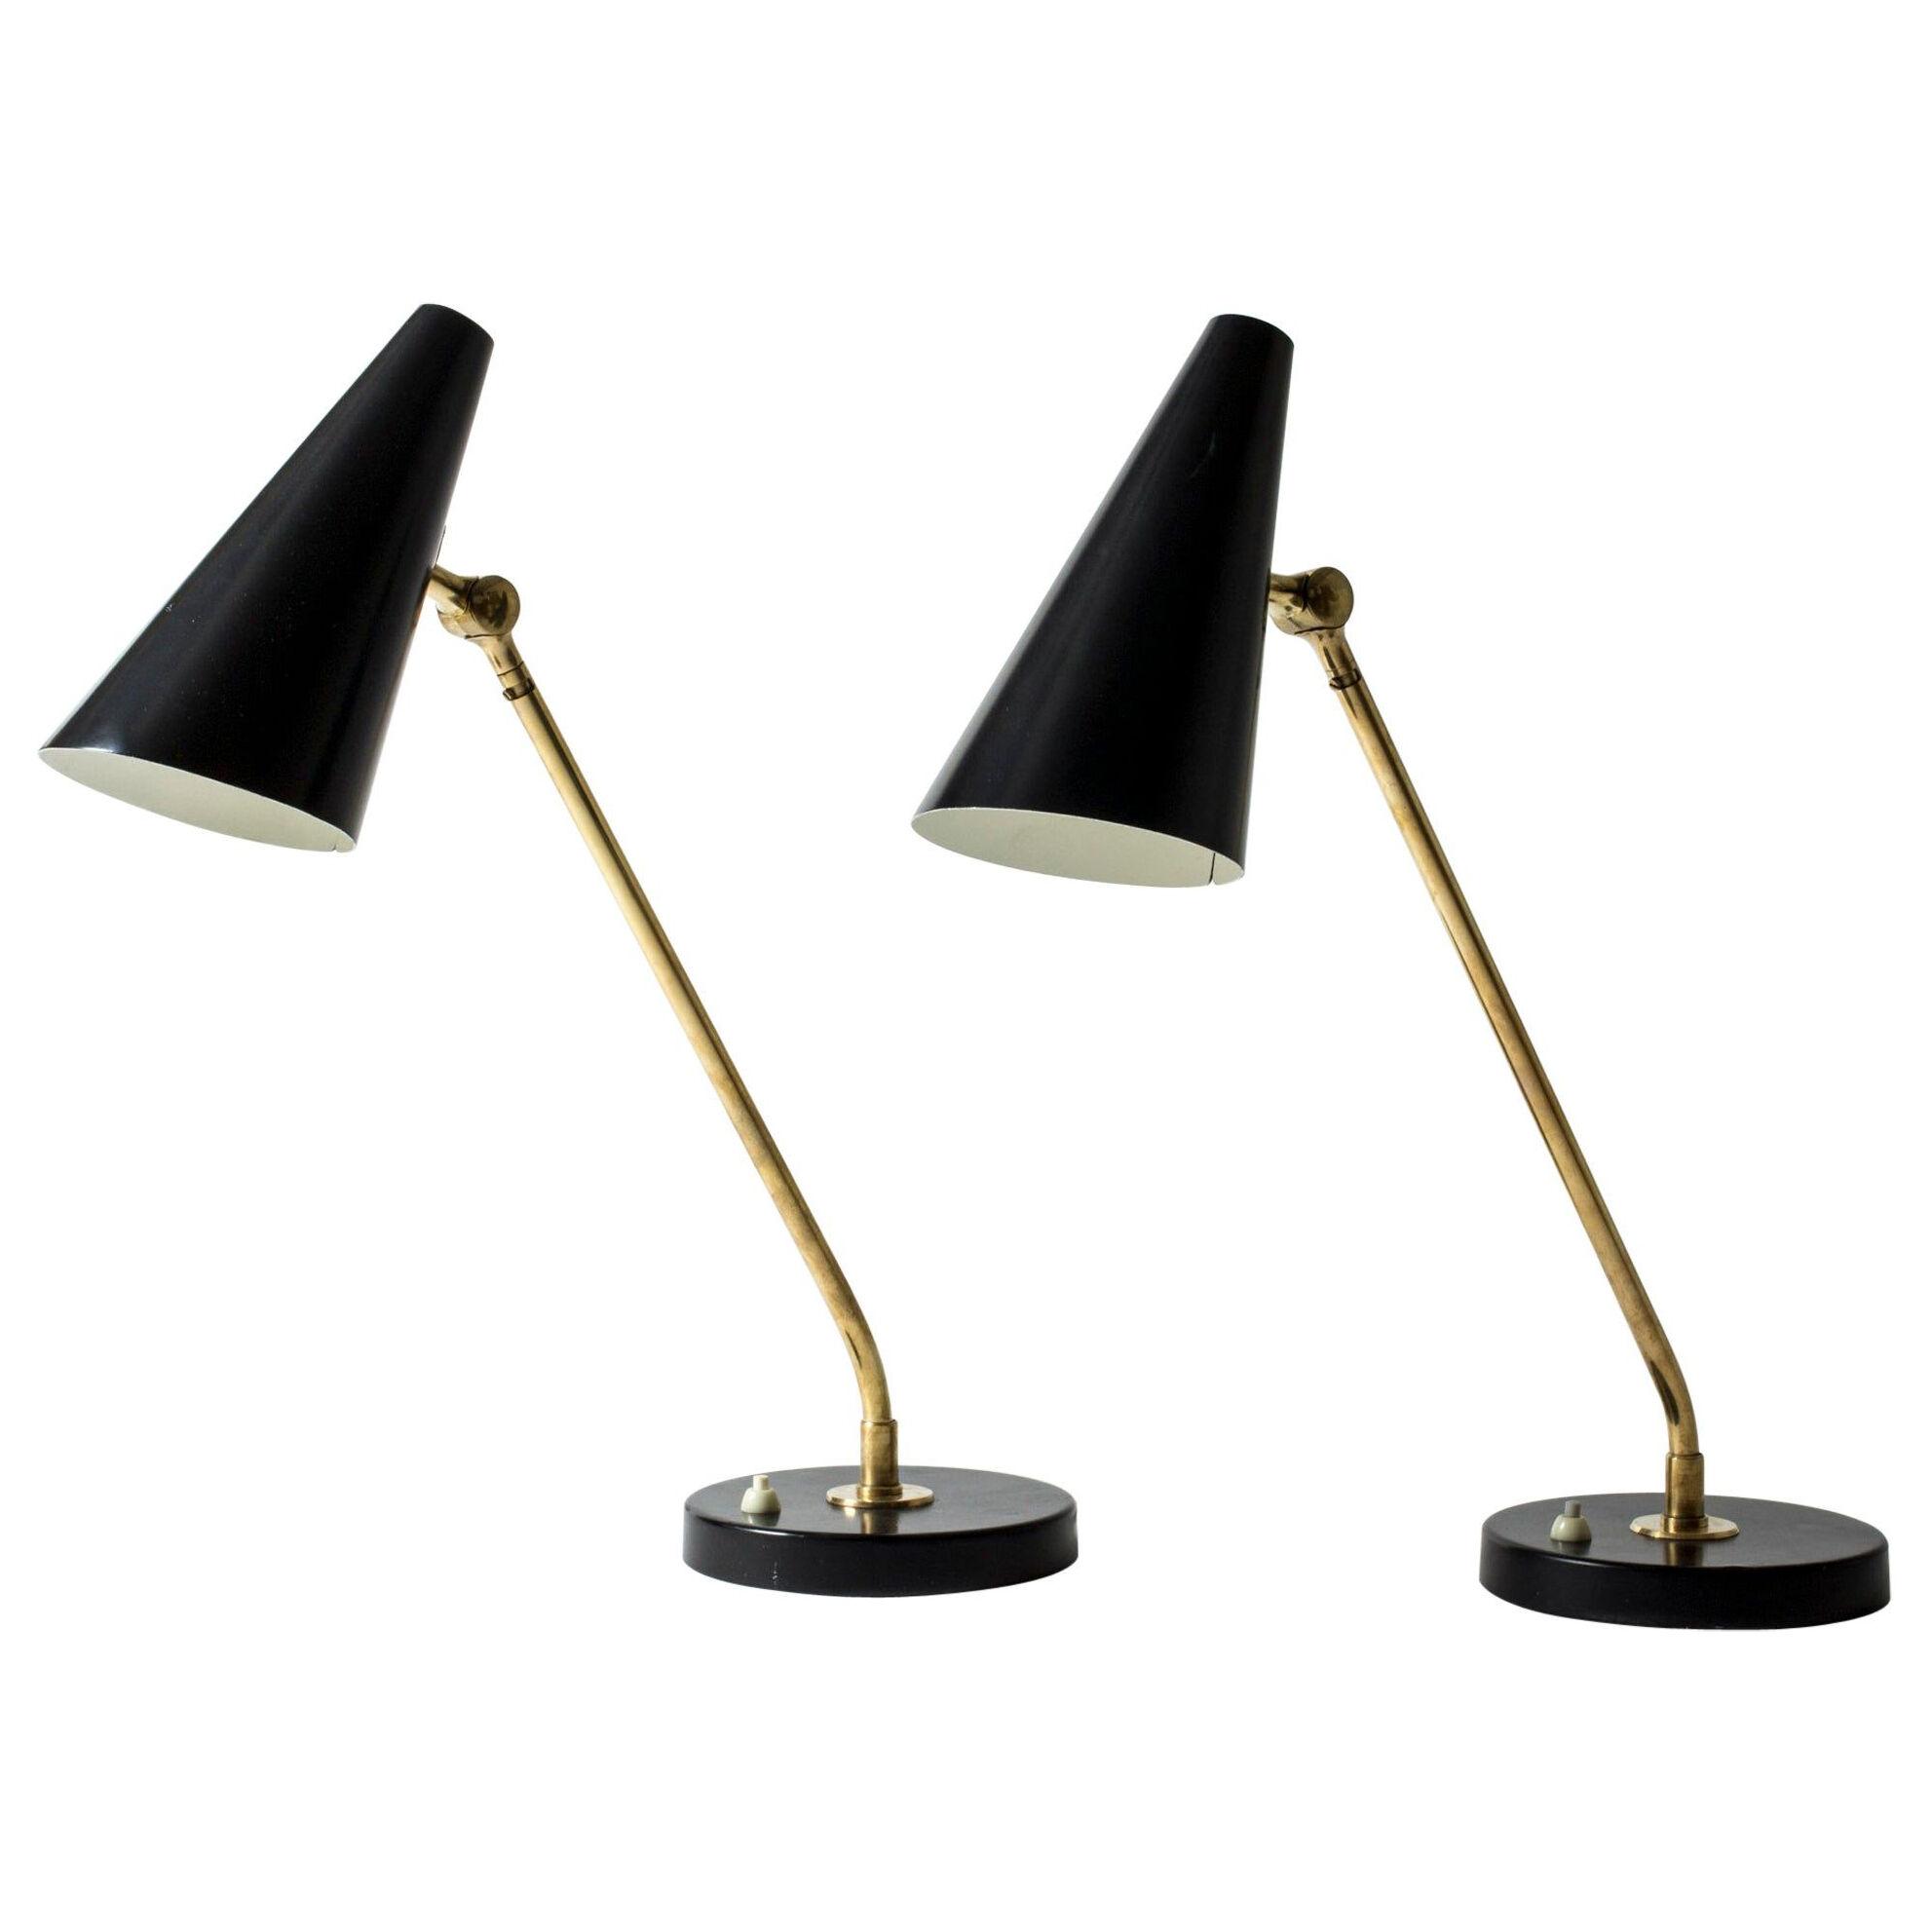 Pair of Table Lamps Designed by Bertil Brisborg for Nordiska Kompaniet, Sweden